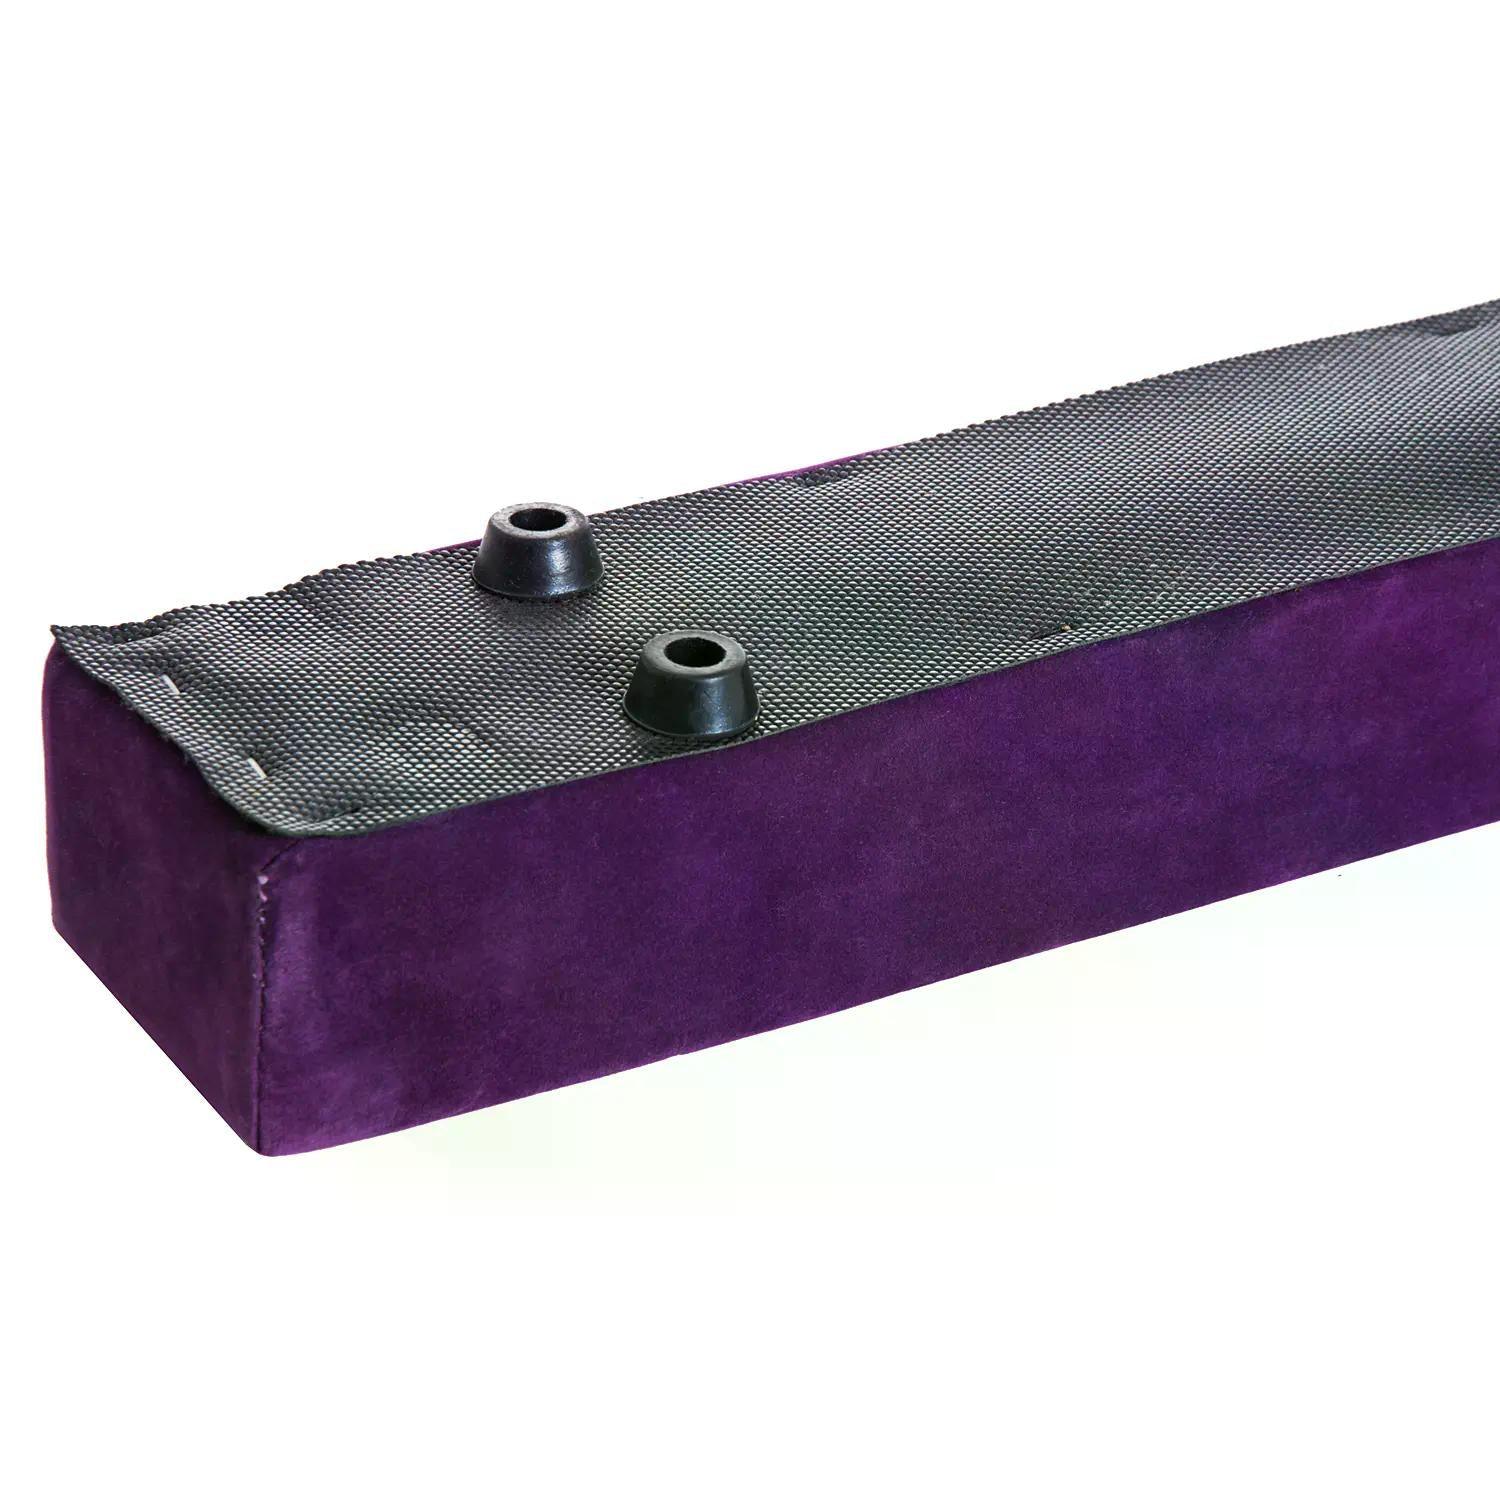 HOMCOM 2.4m Purple Balance Beam Trainer for Home - ALL4U RETAILER LTD